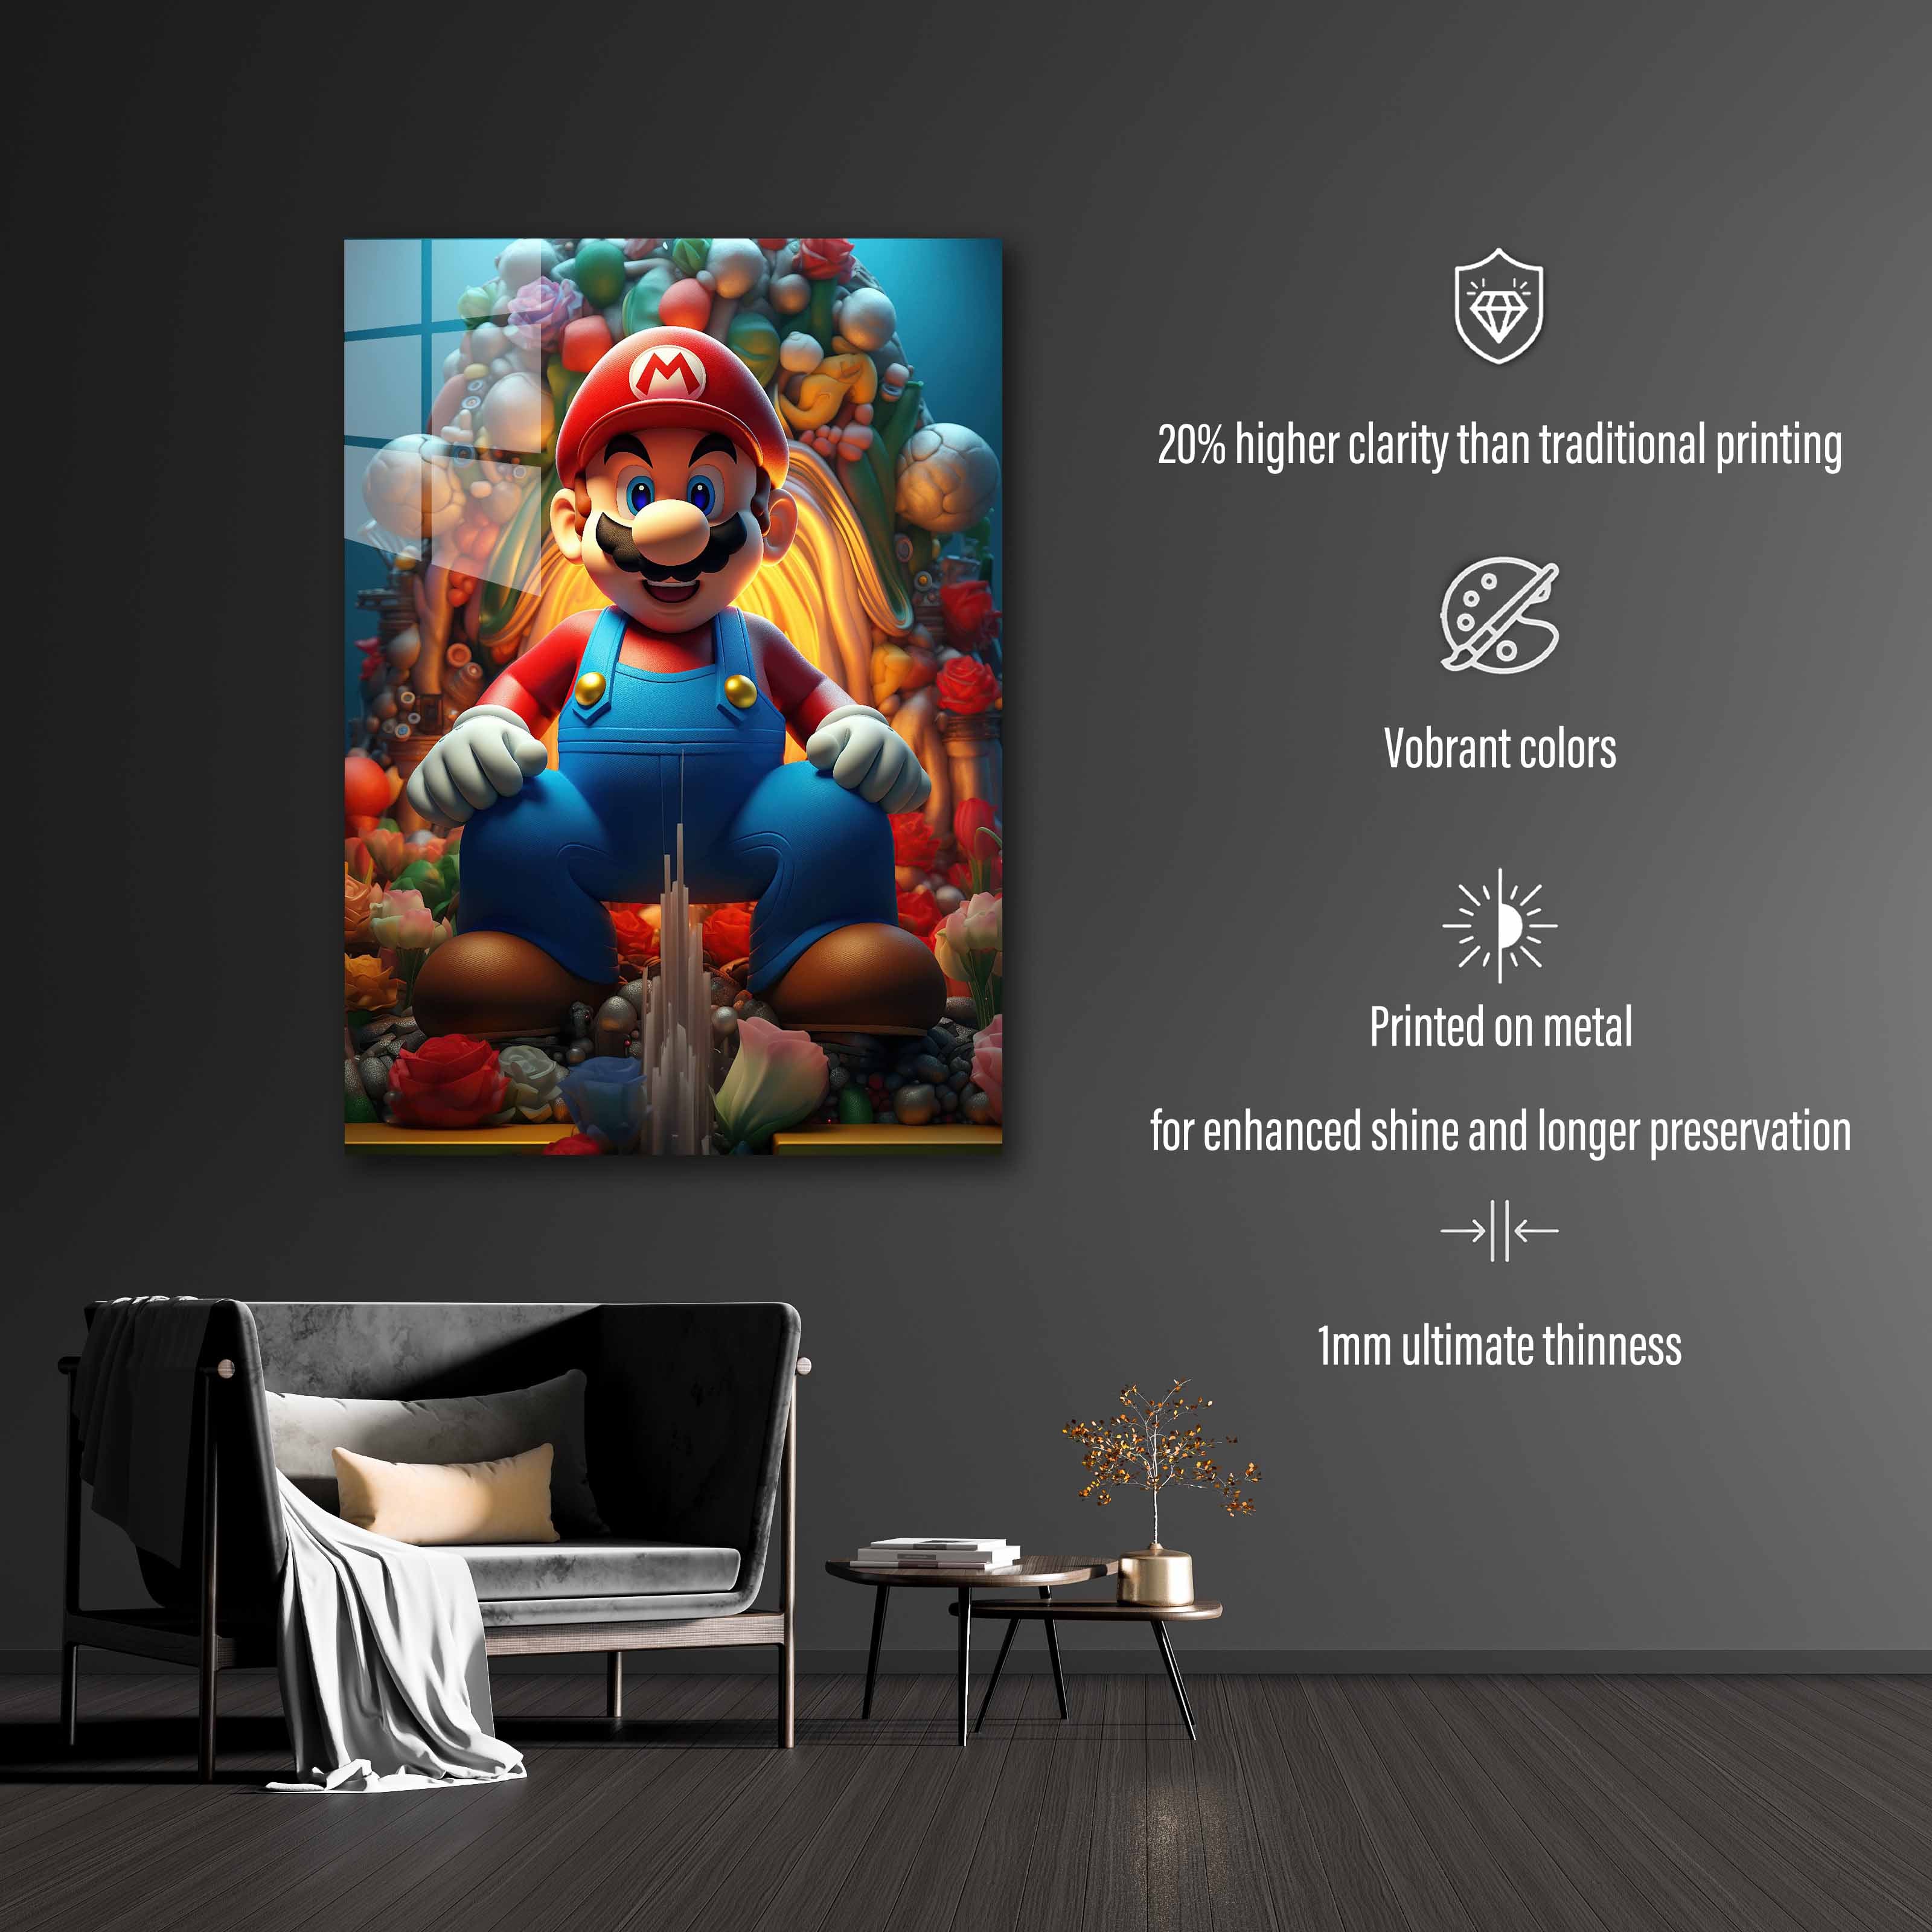 Super Mario Gaming 12-designed by @SAMCRO